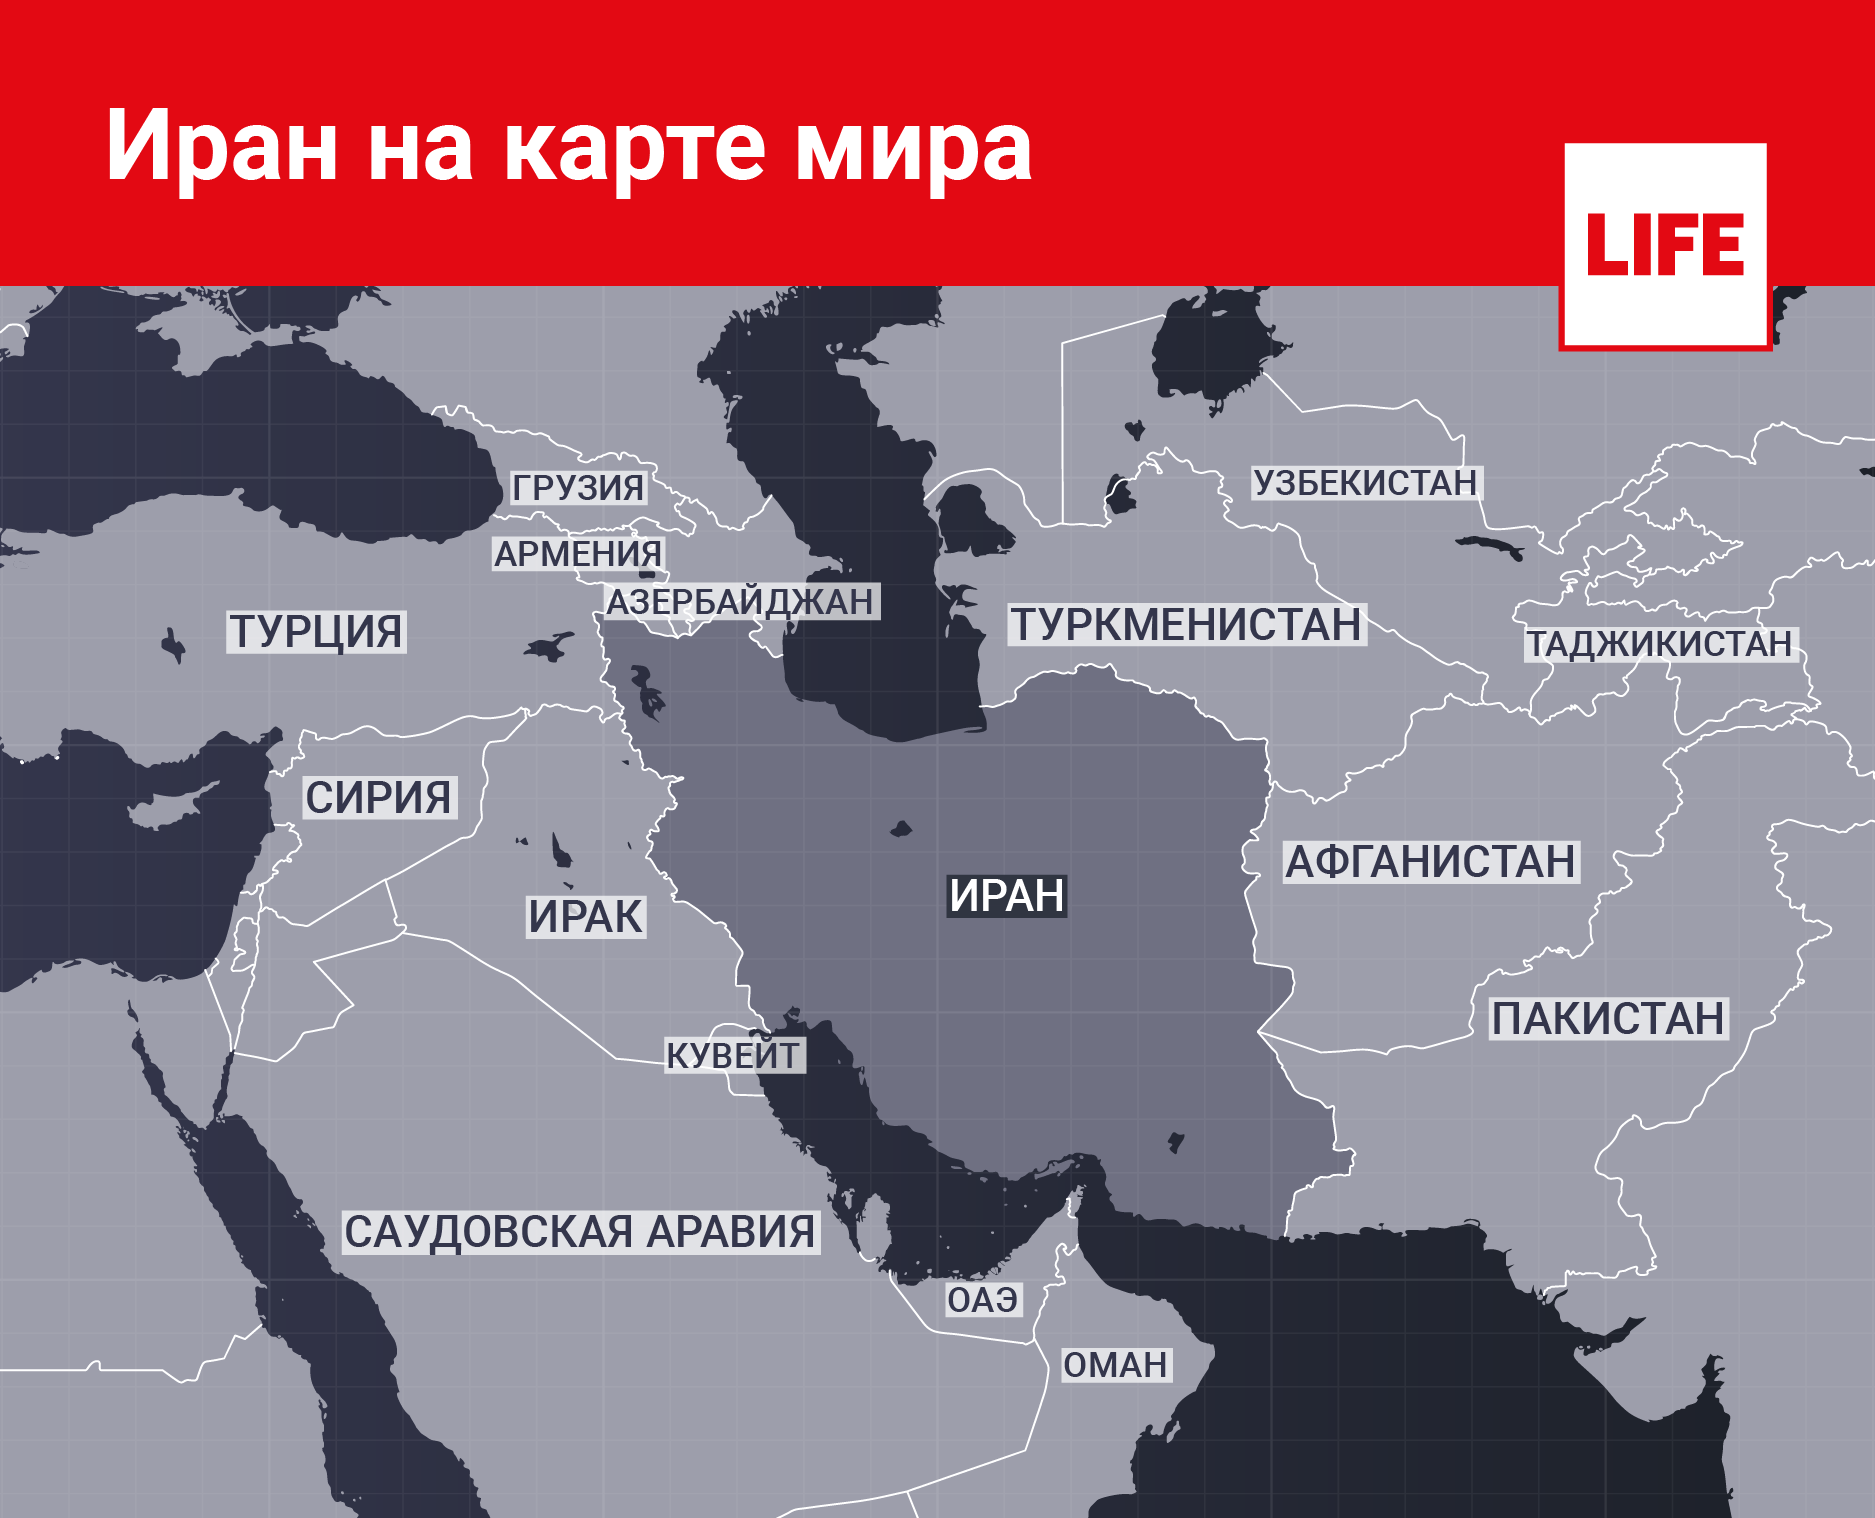 Иран на карте мира. Инфографика © LIFE